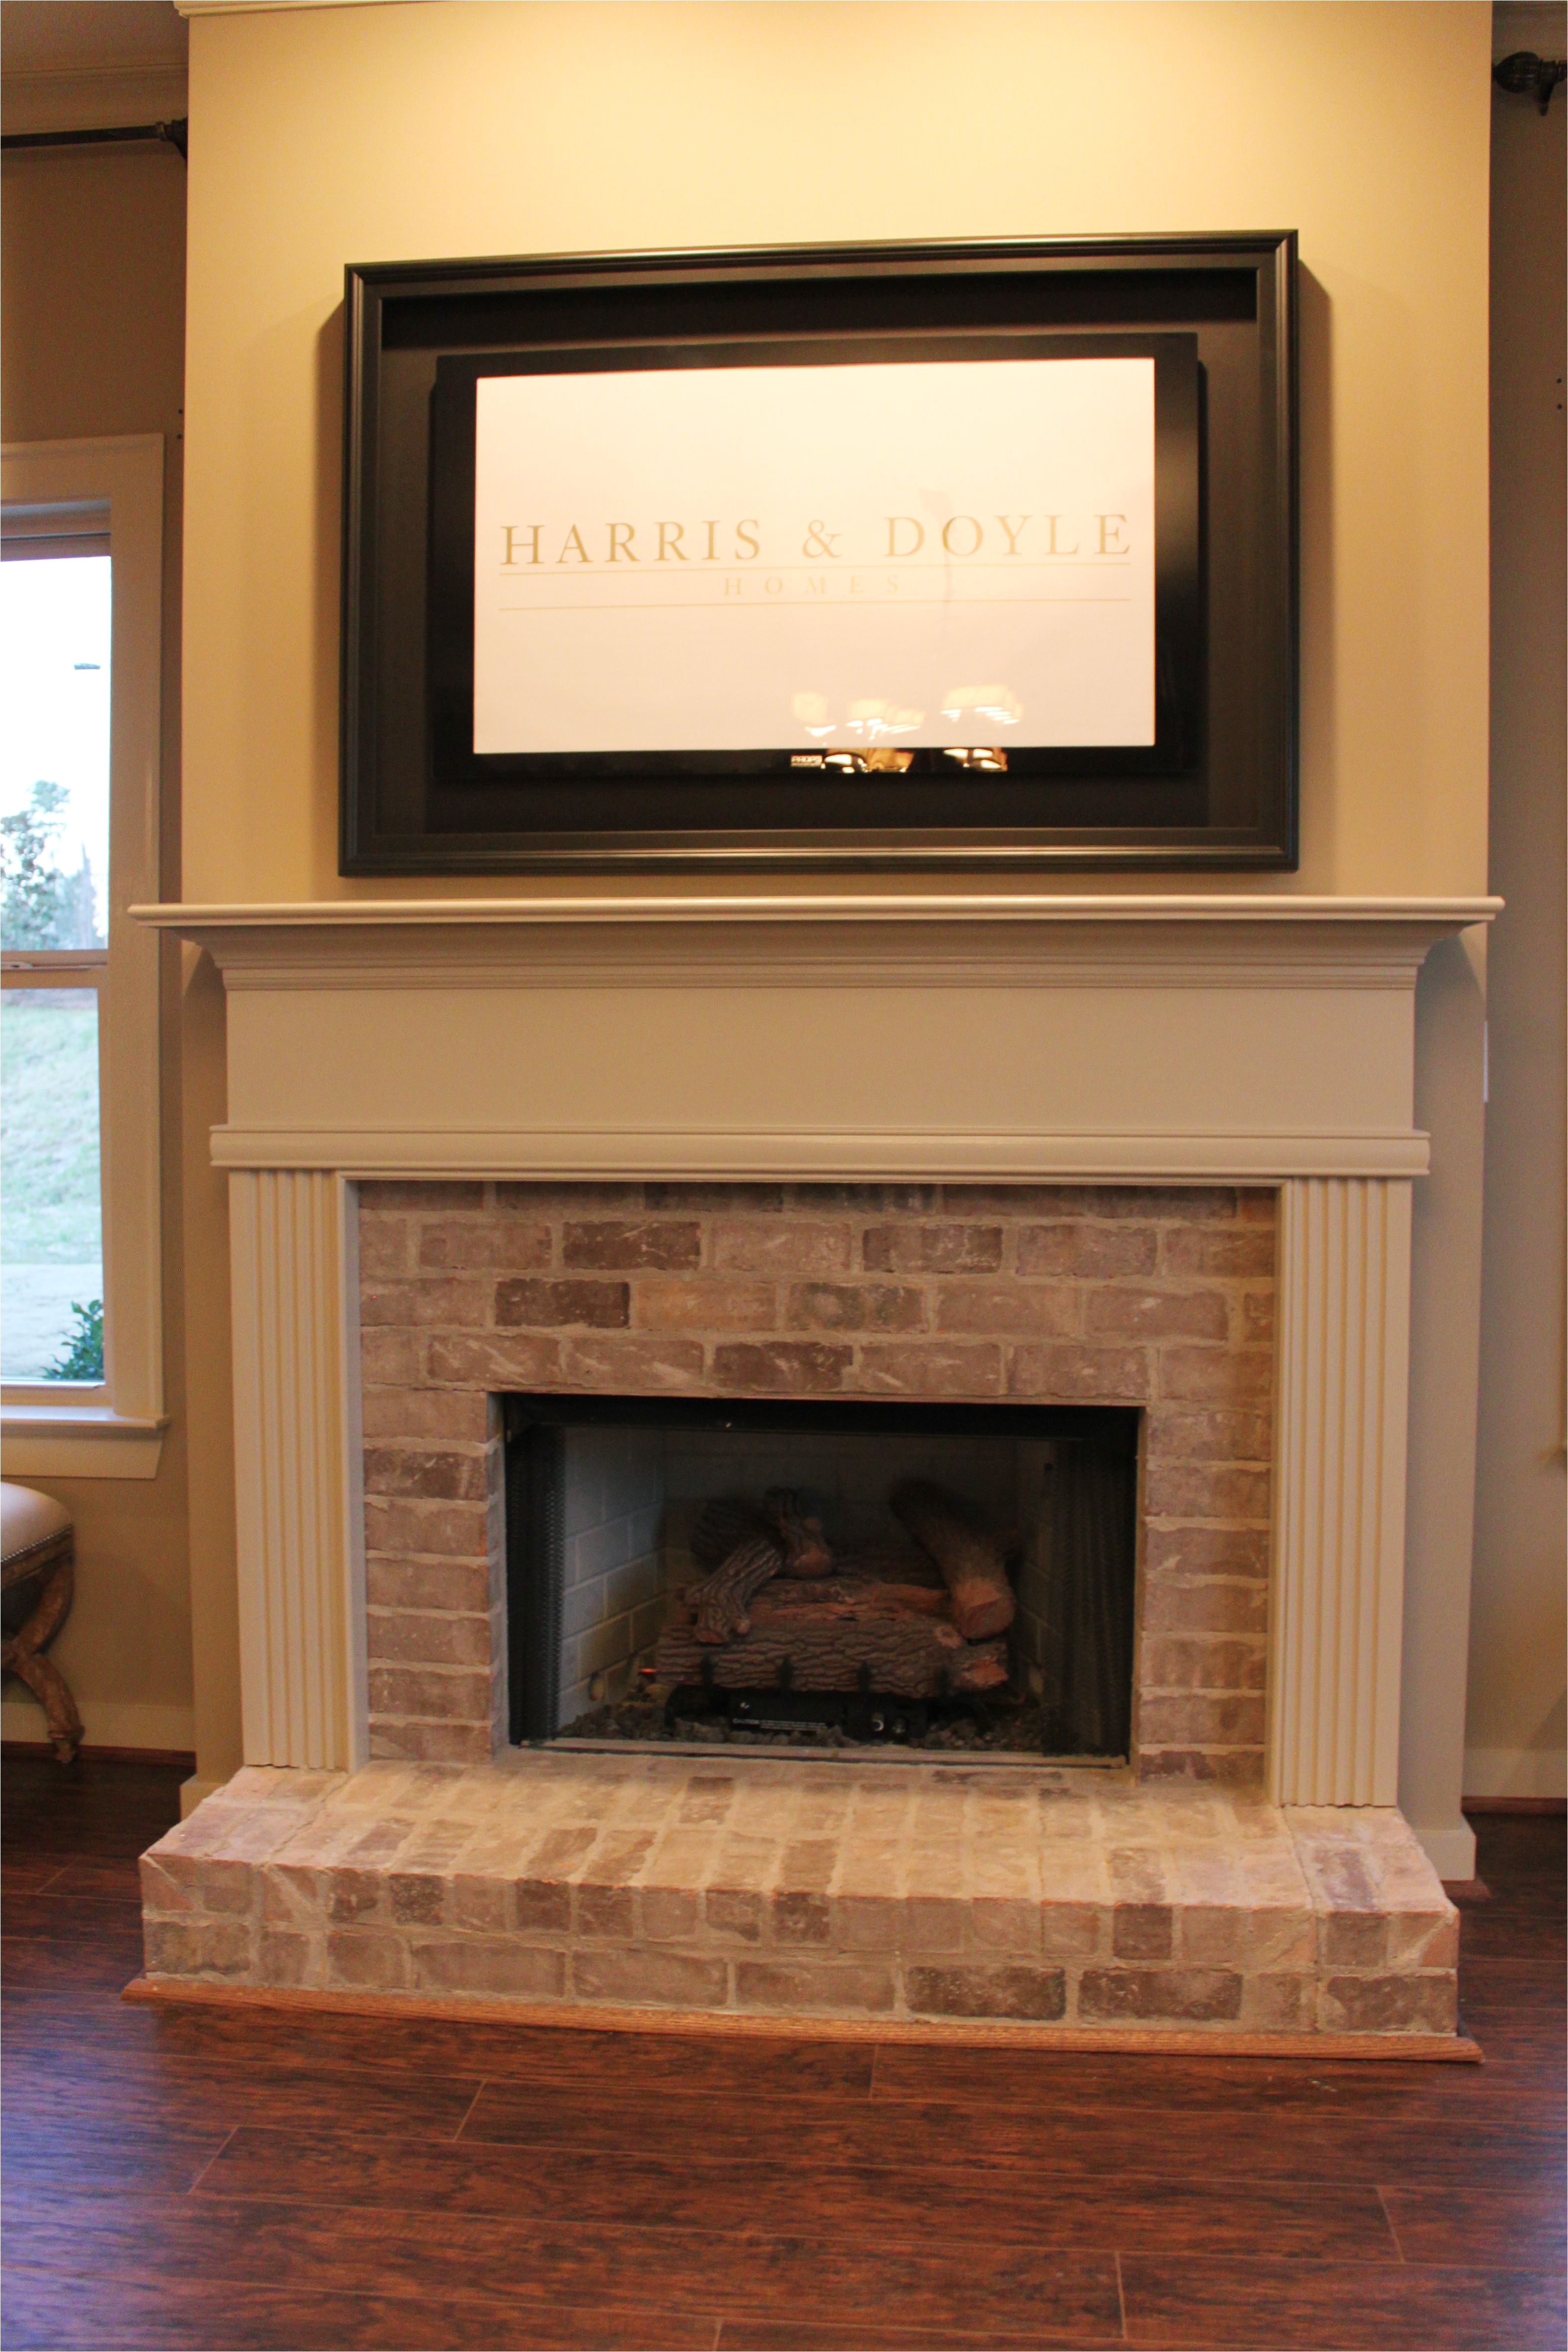 Quartz Fireplace Surround Half Brick Fireplace Surround with Elevated Hearth Home Decor